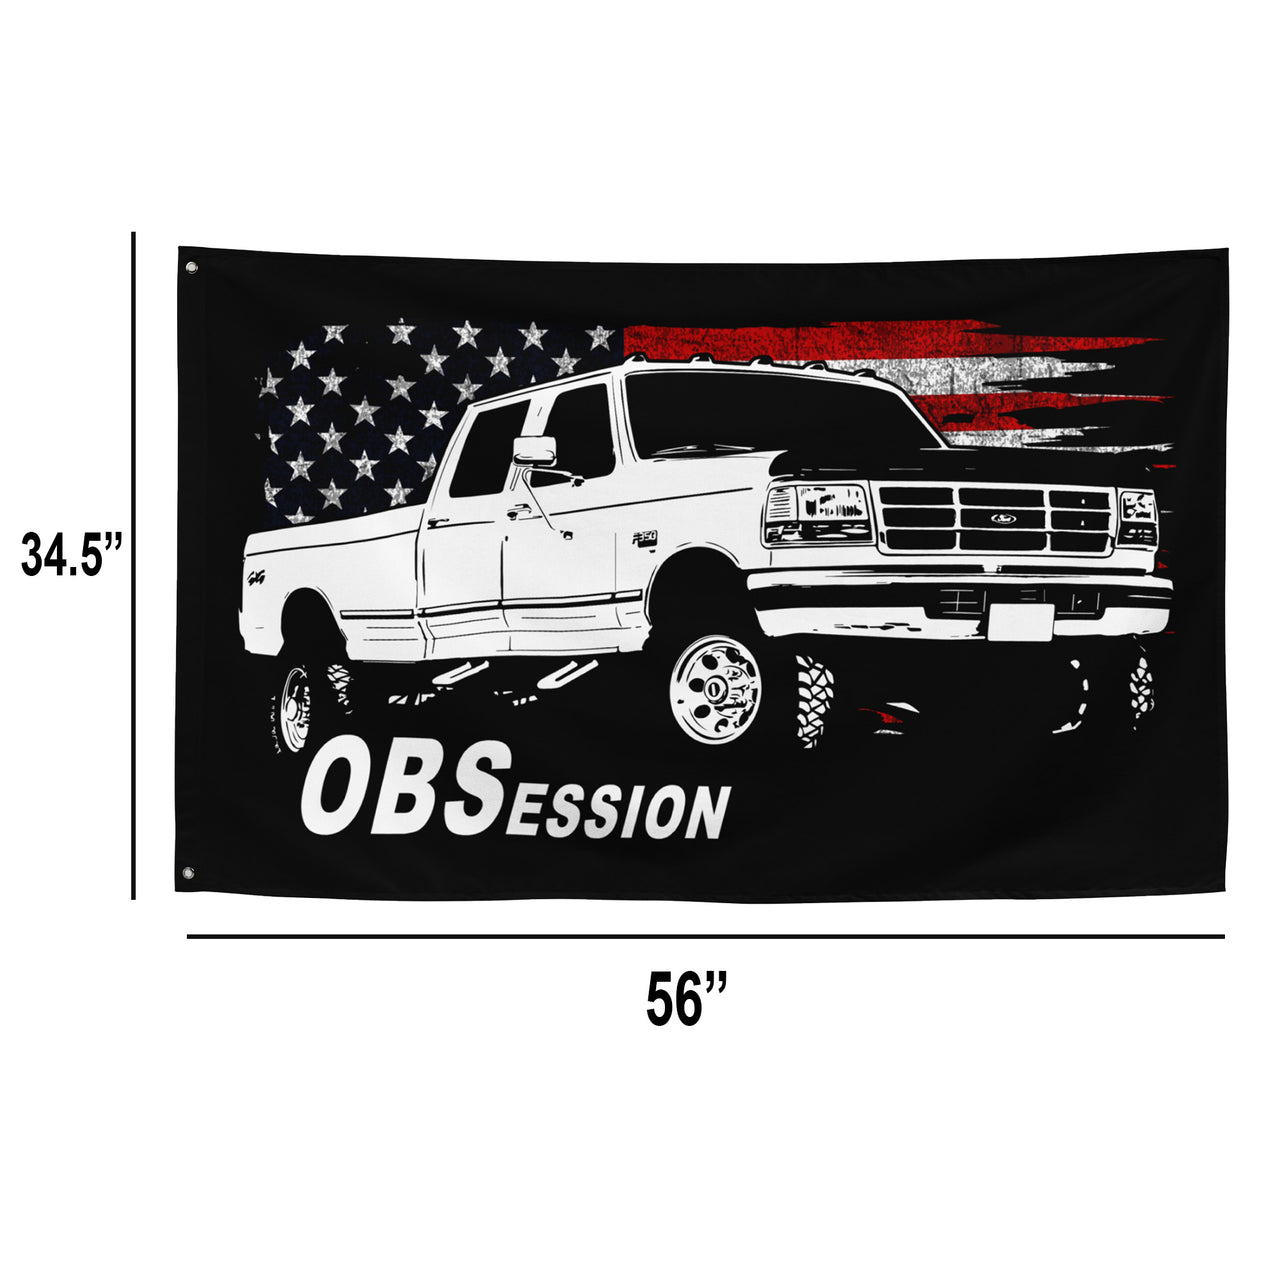 OBS Crew Cab Truck Wall Flag dimensions